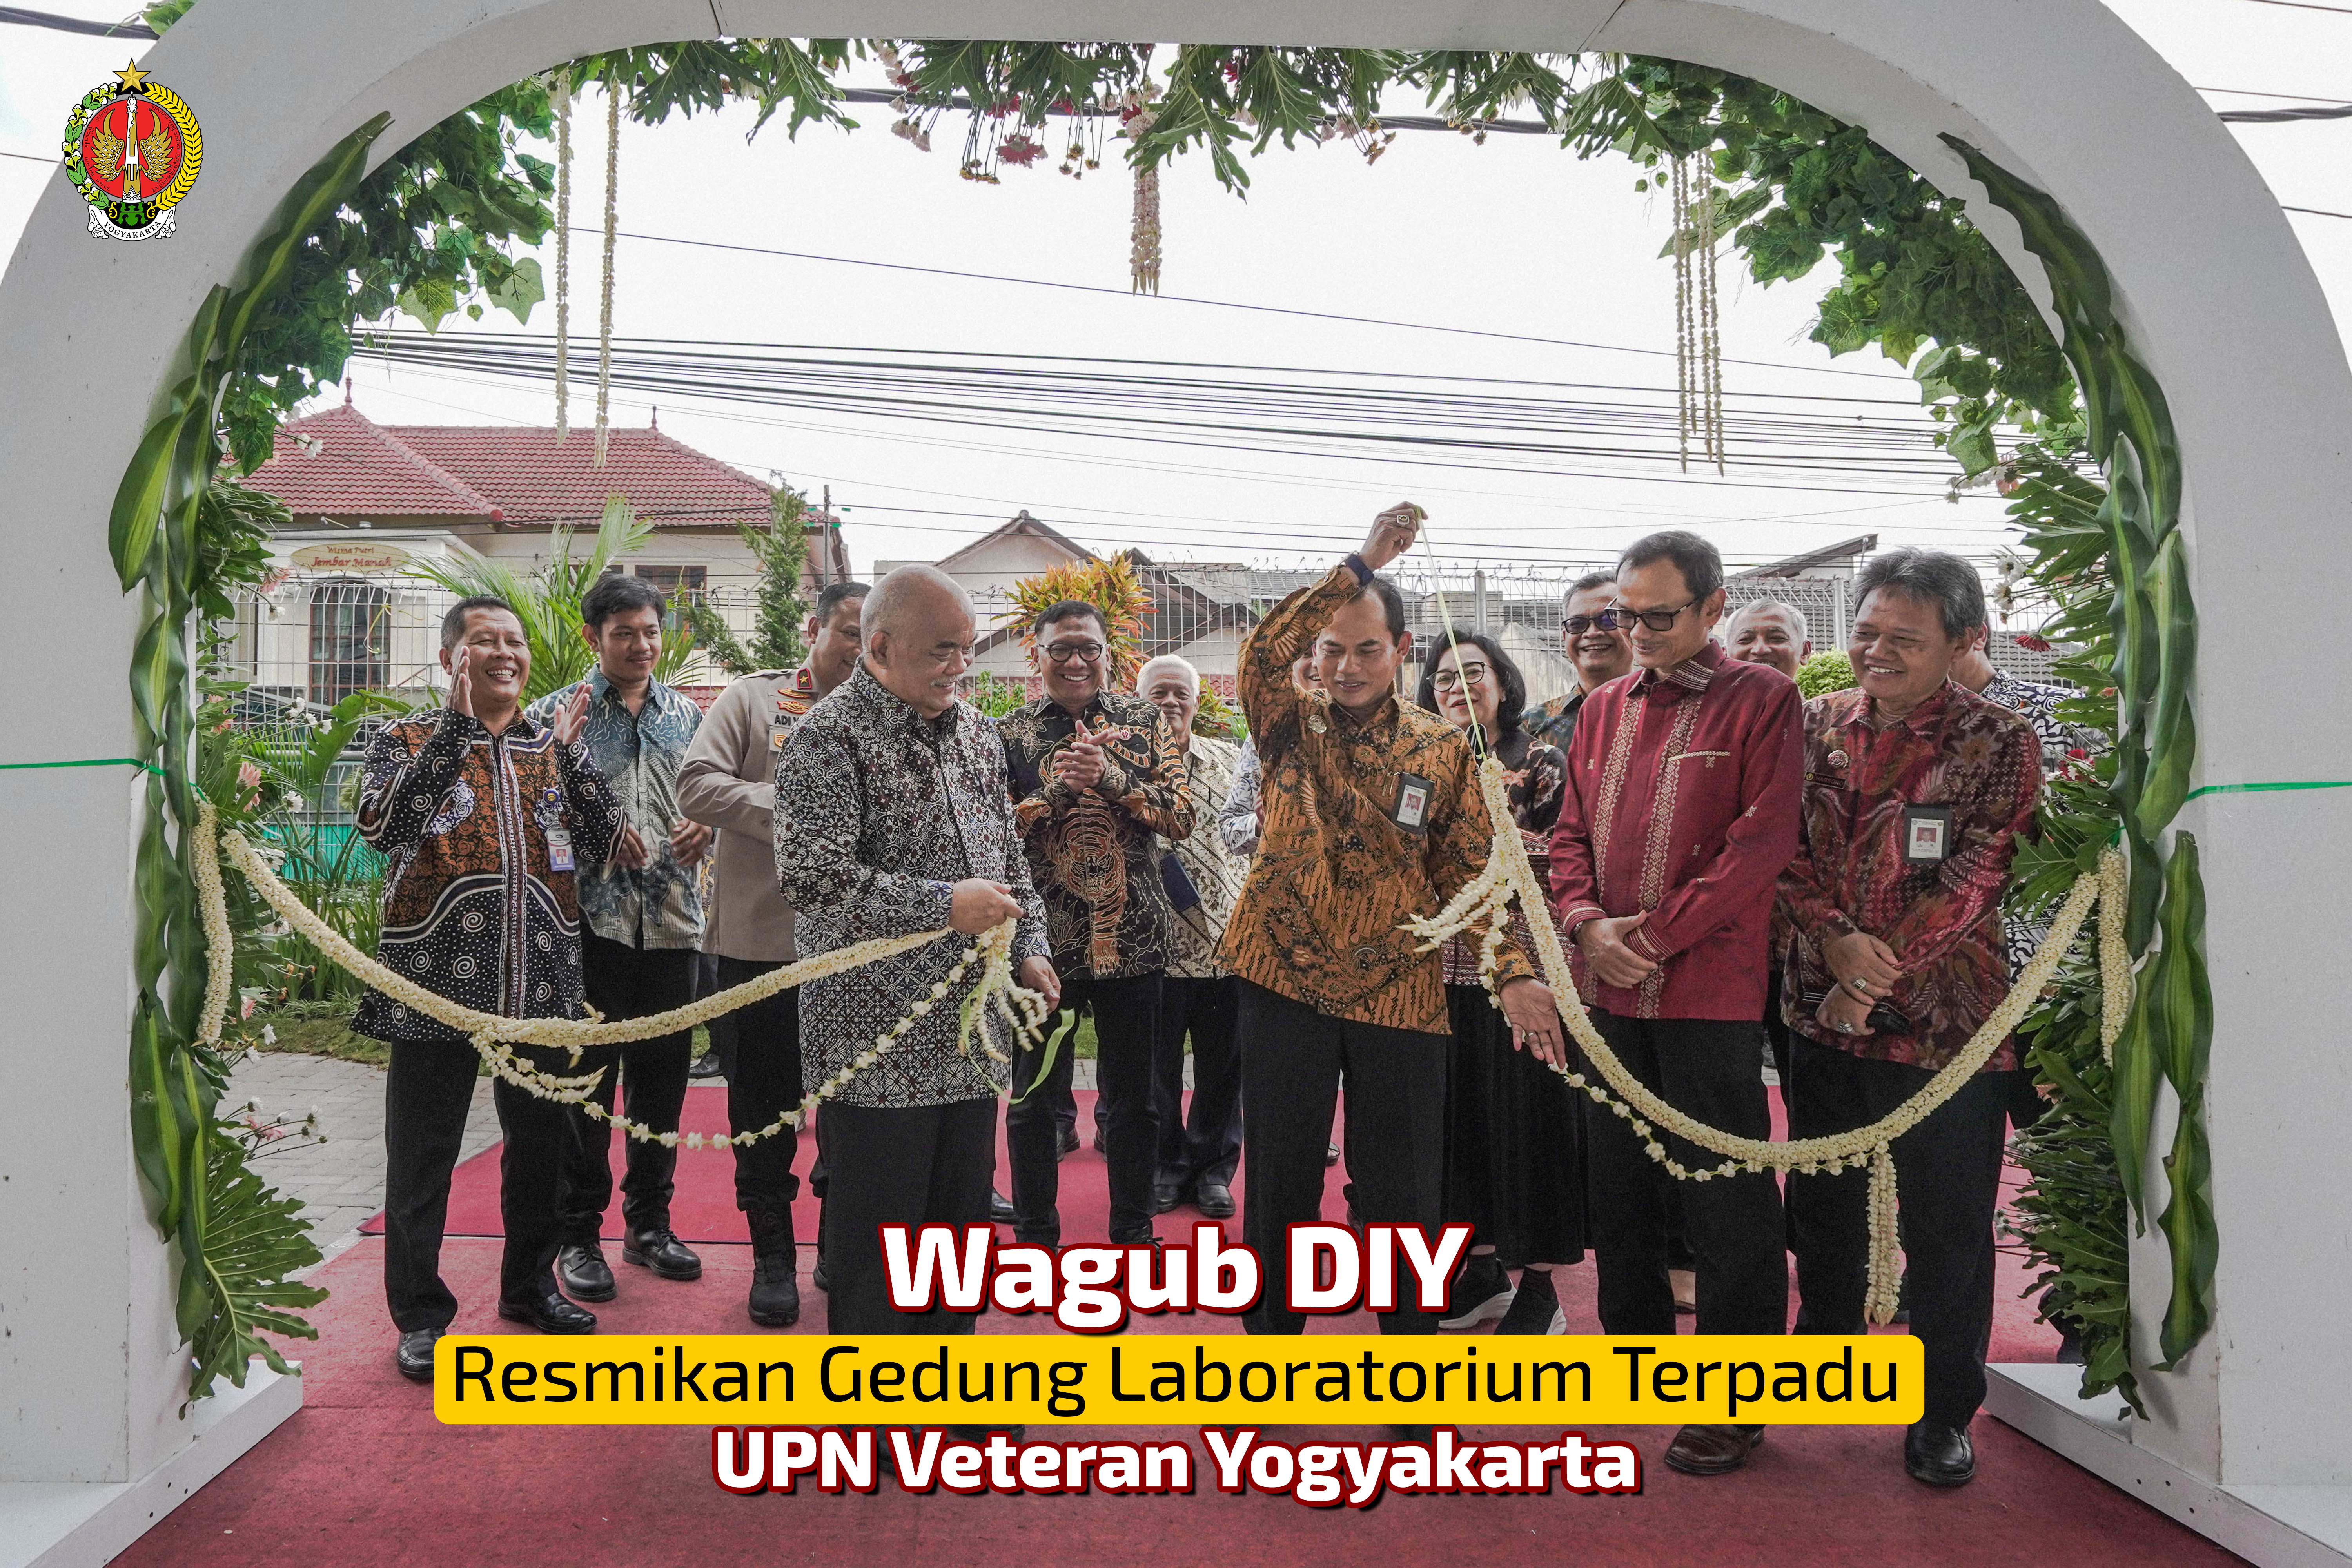  Wagub DIY Resmikan Gedung Laboratorium Terpadu UPN Veteran Yogyakarta